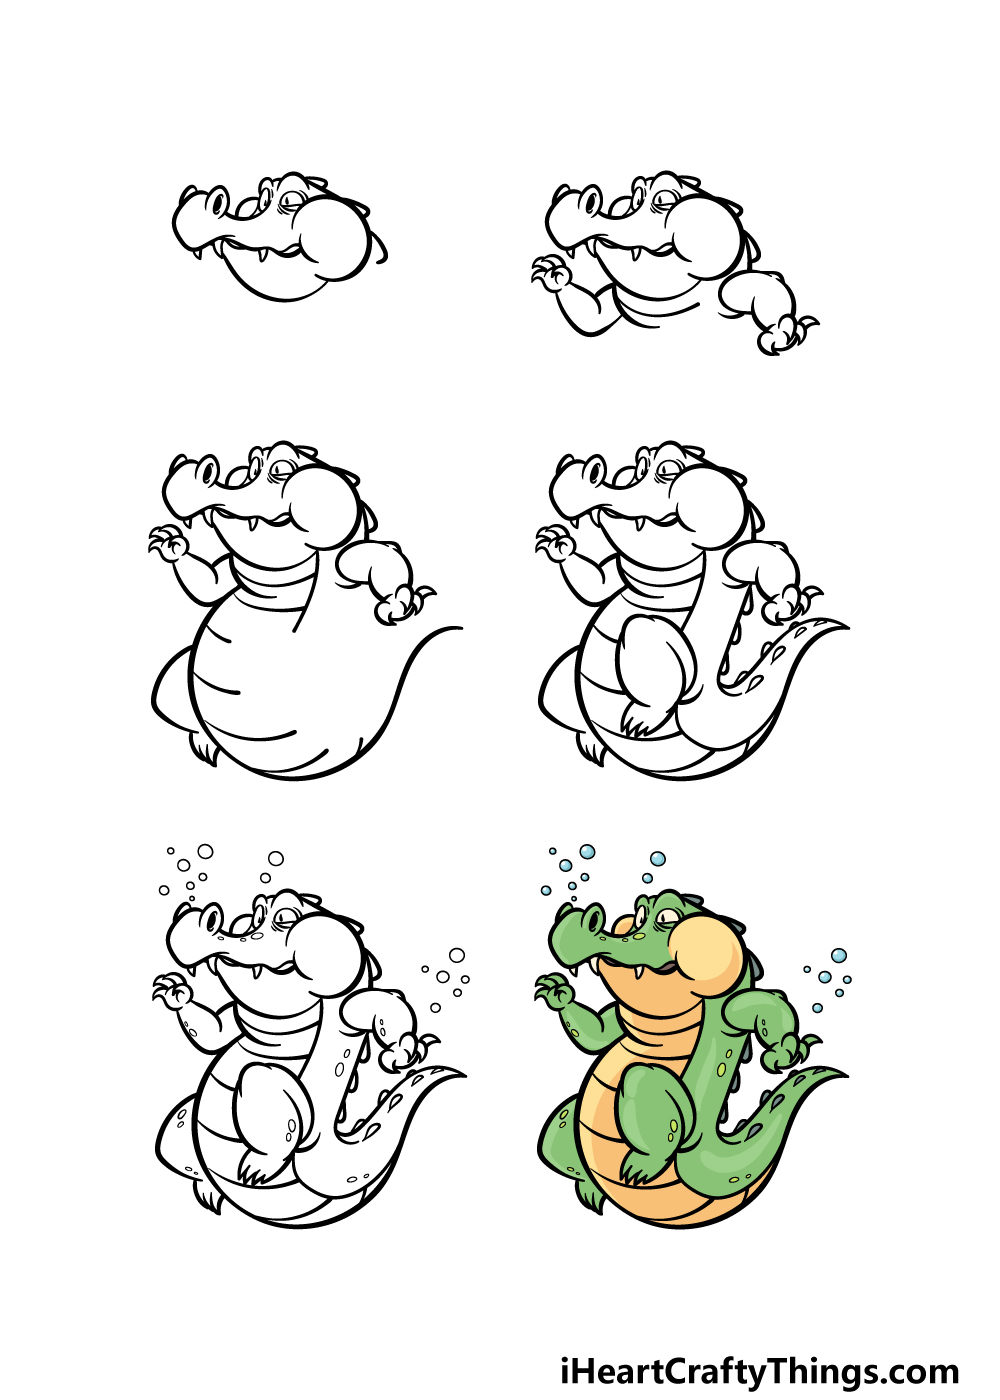 how to draw a cartoon crocodile in 6 steps